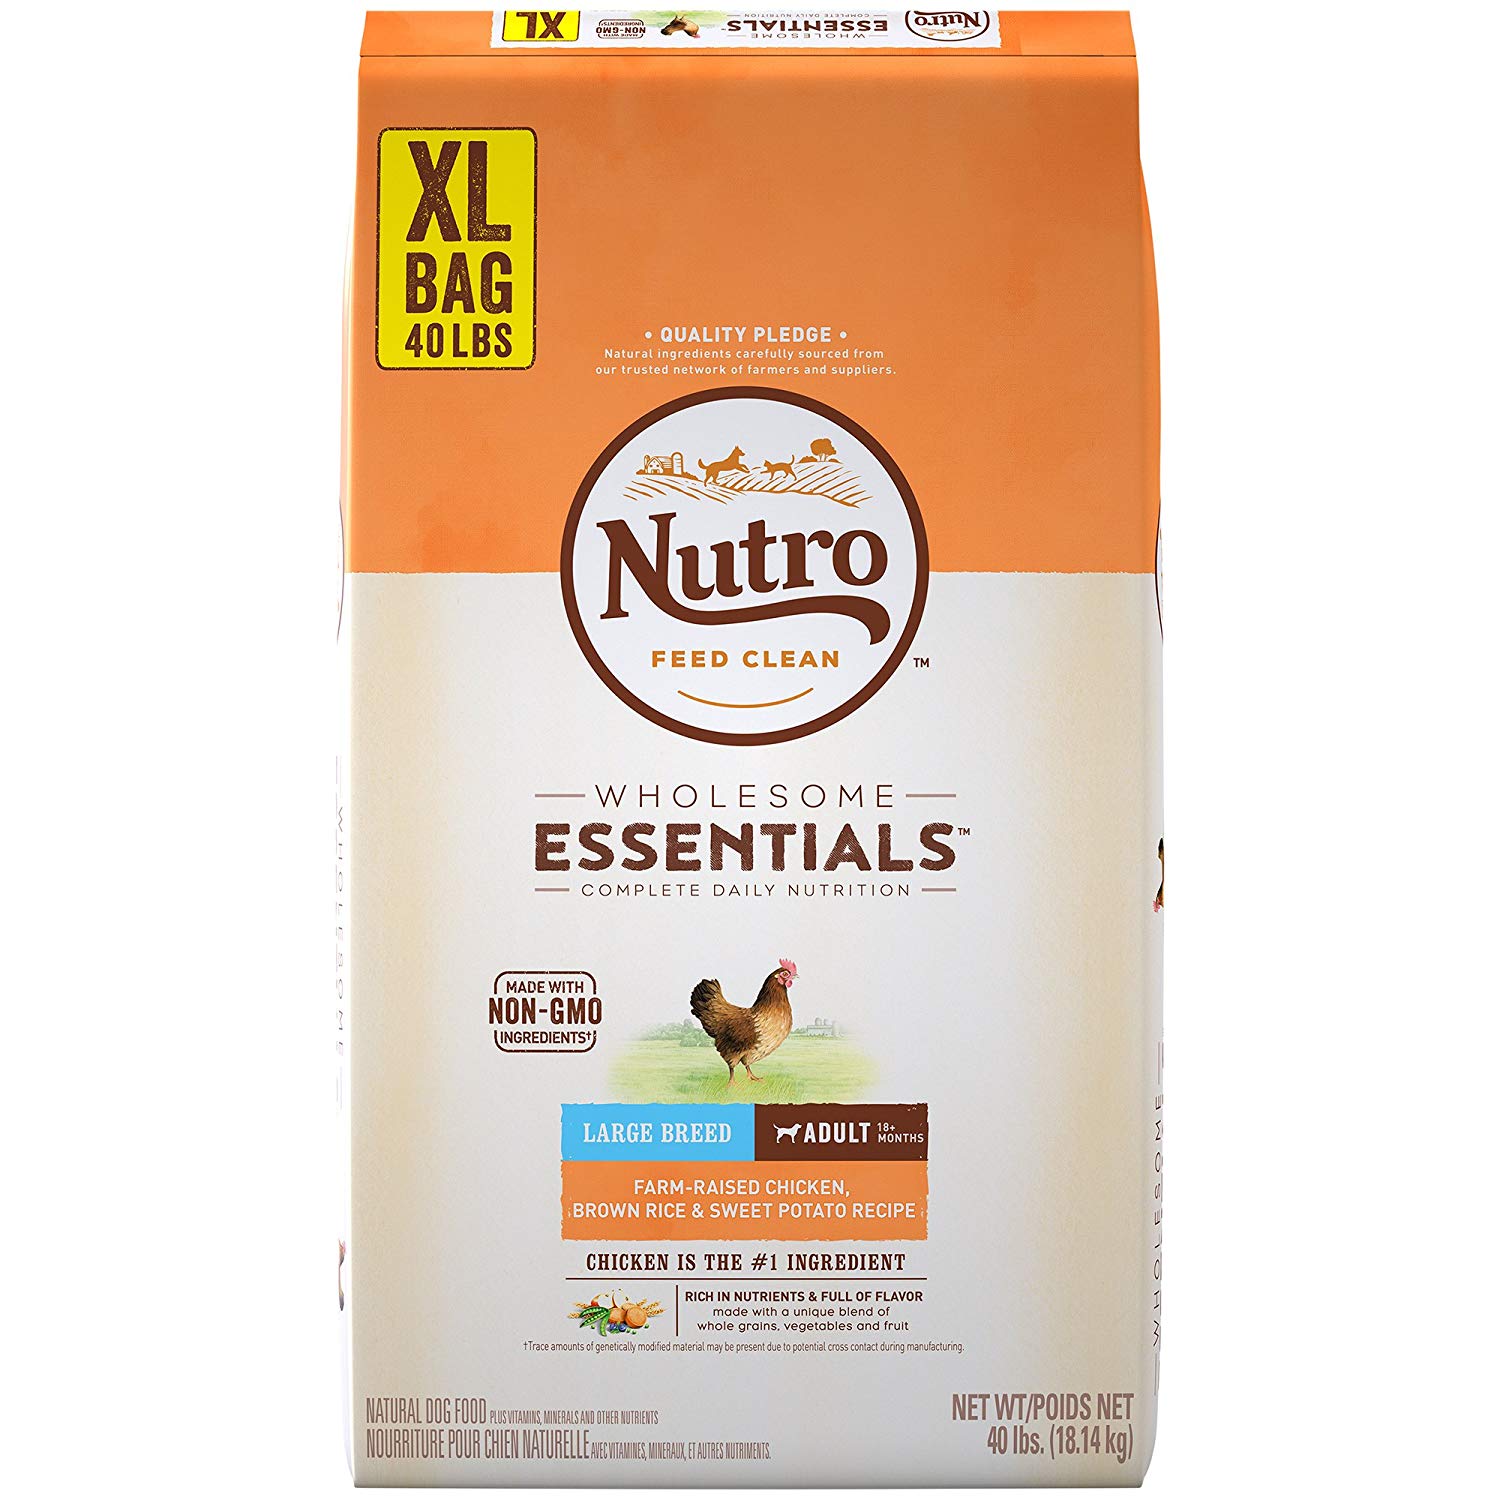 free-15-pound-bag-of-nutro-natural-choice-dog-food-rebate-up-to-39-99